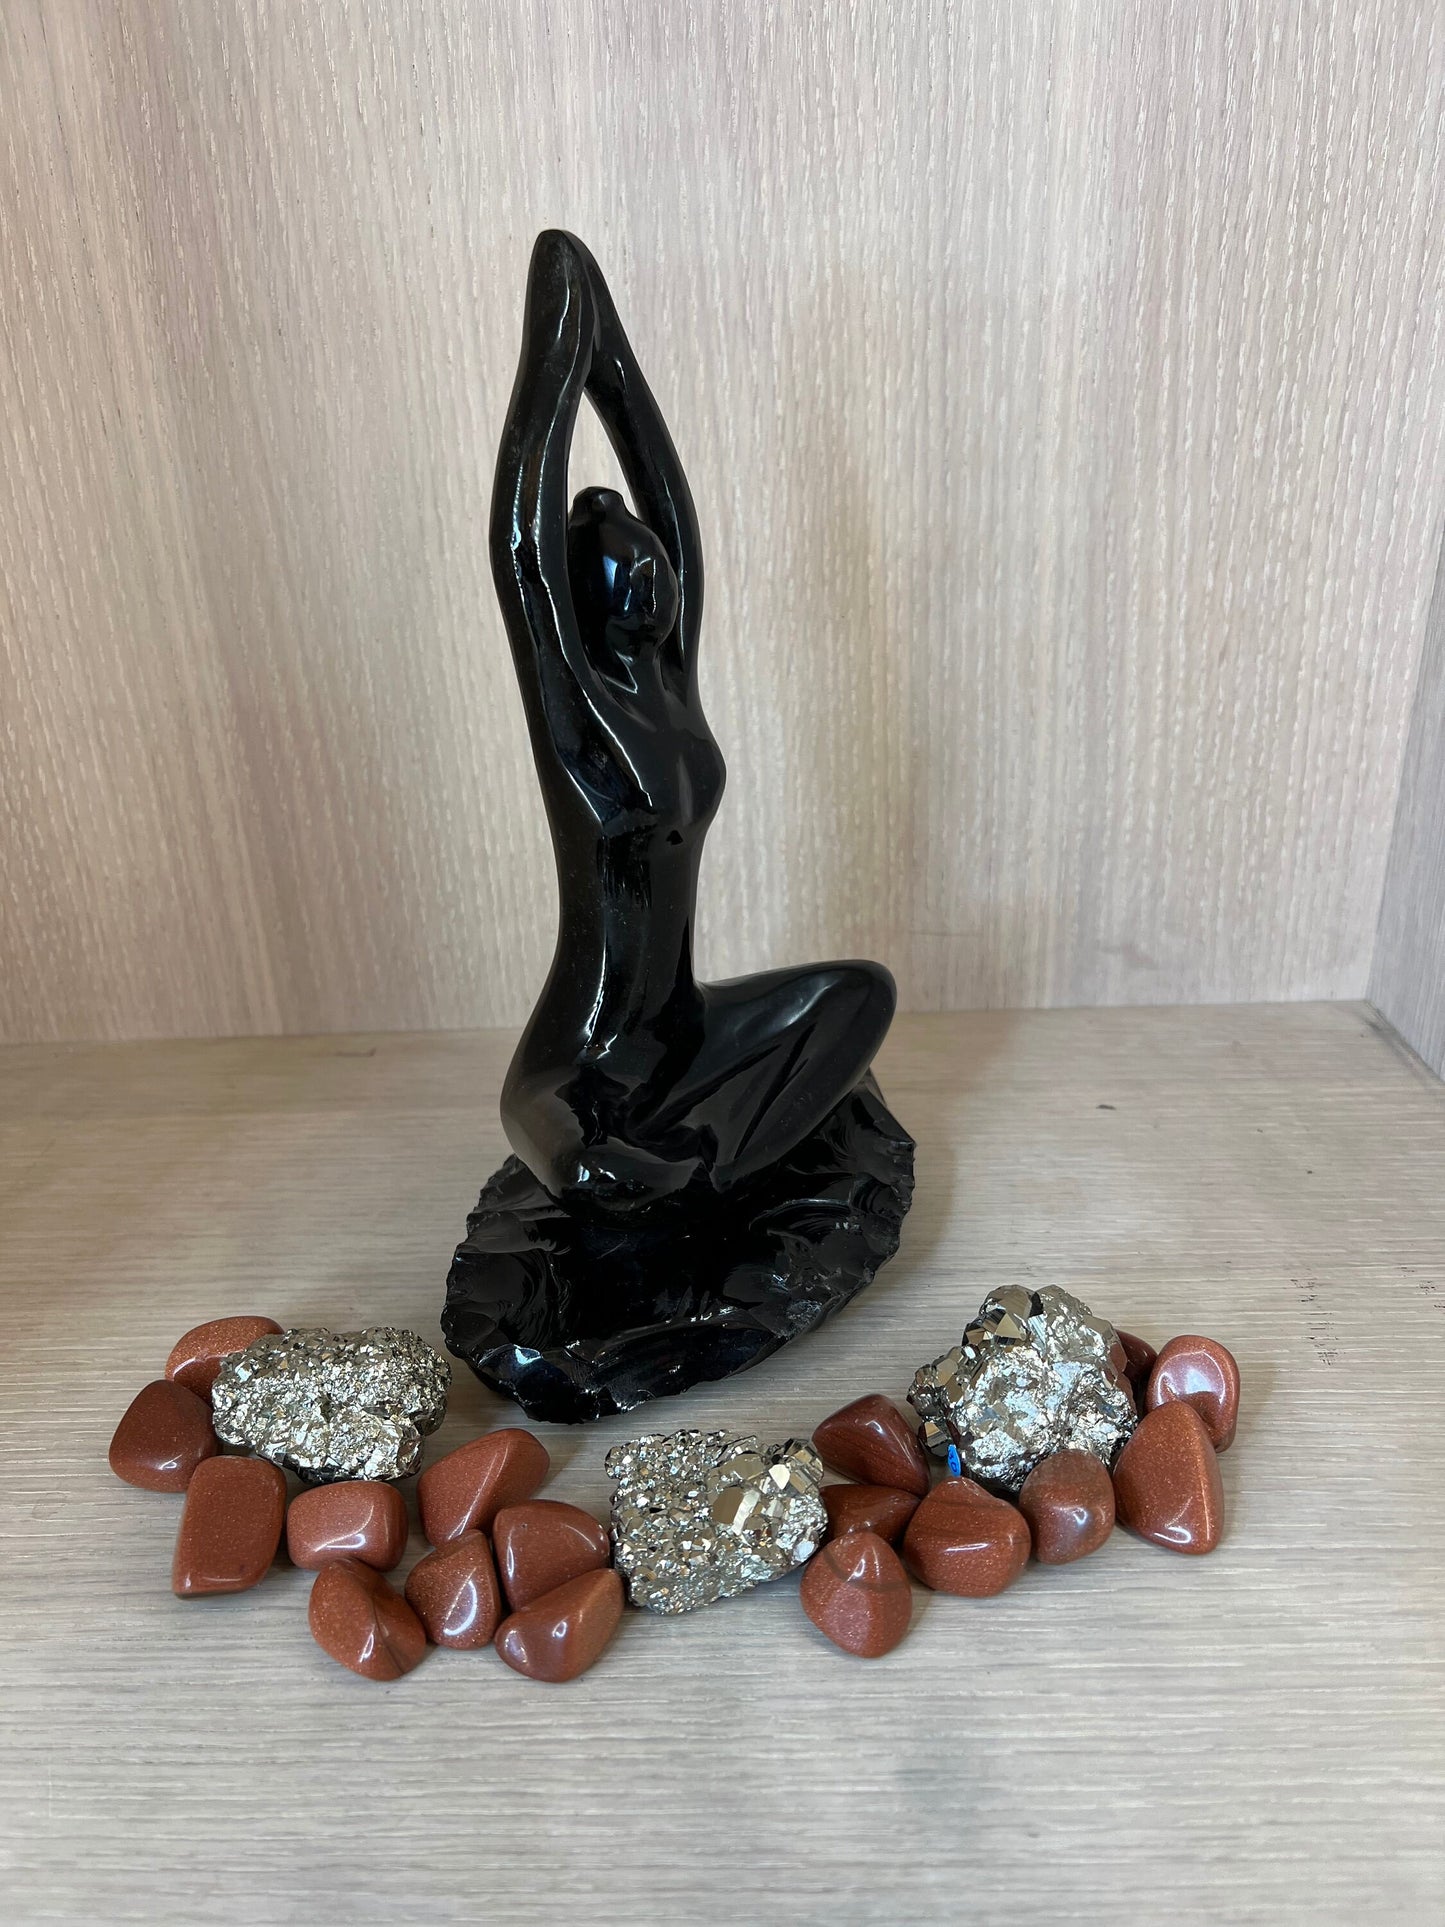 Black Obsidian Crystal Tabletop sculpture Meditating Women  Polished Stone Release Trauma - Negative Energy - Pain - Emotional Damage